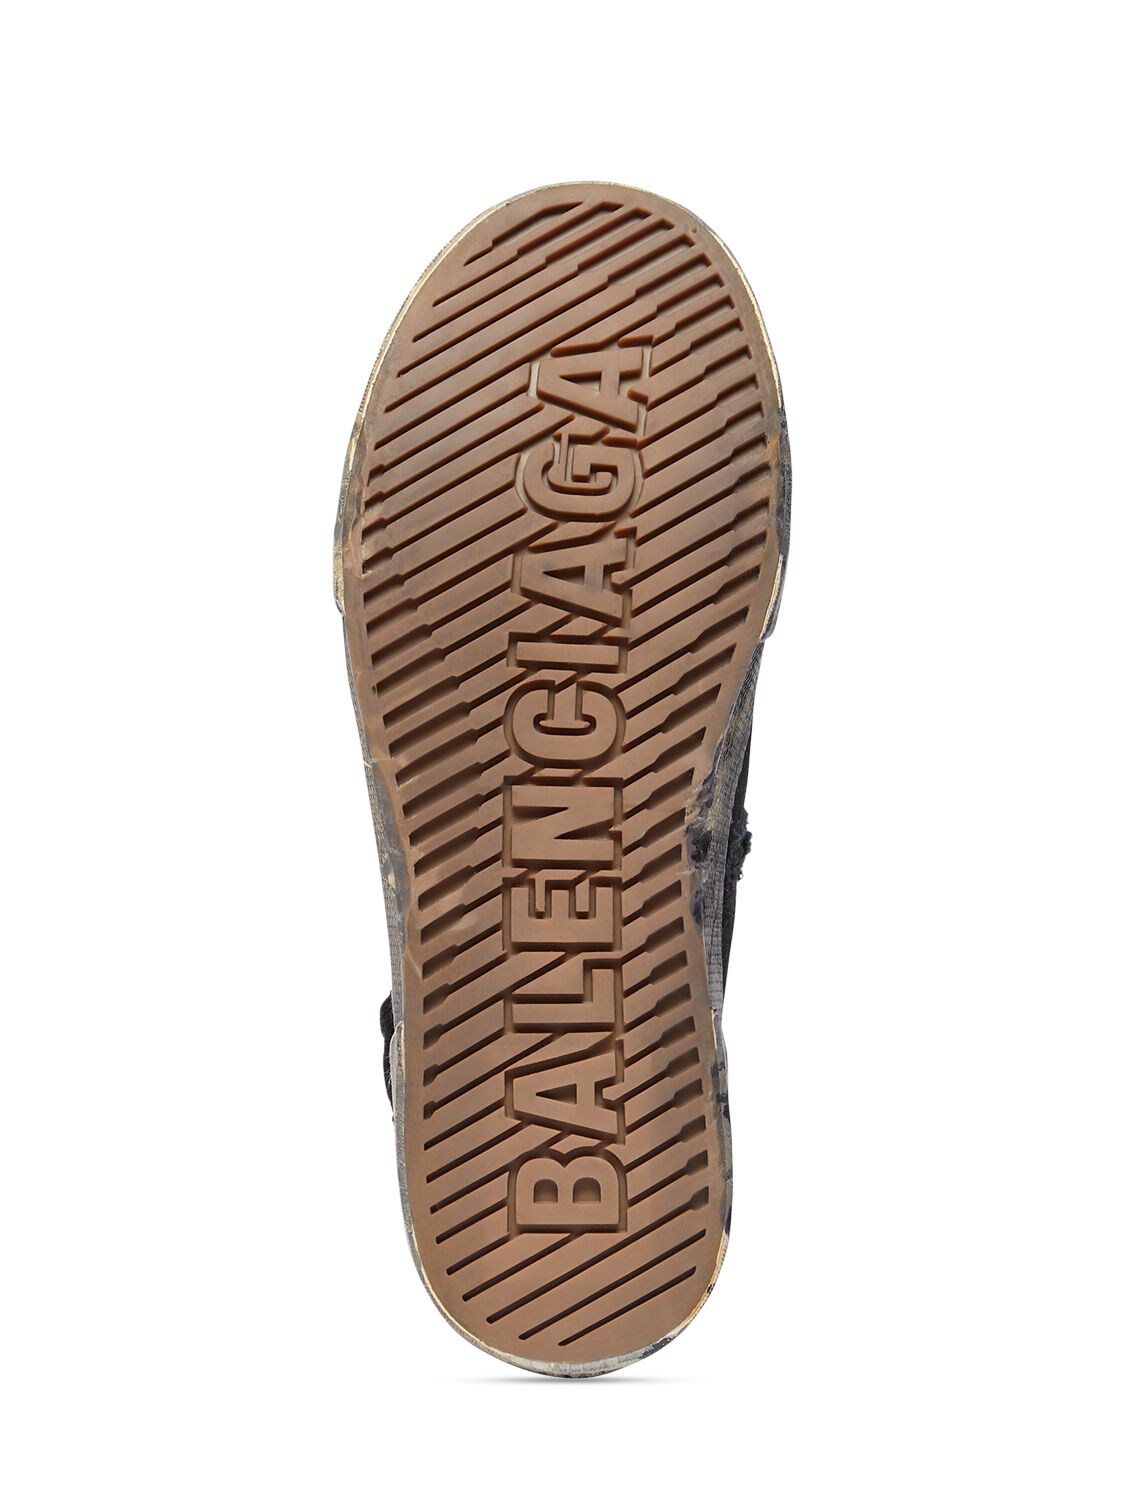 Shop Balenciaga 20mm Paris Cotton High Top Sneakers In Black